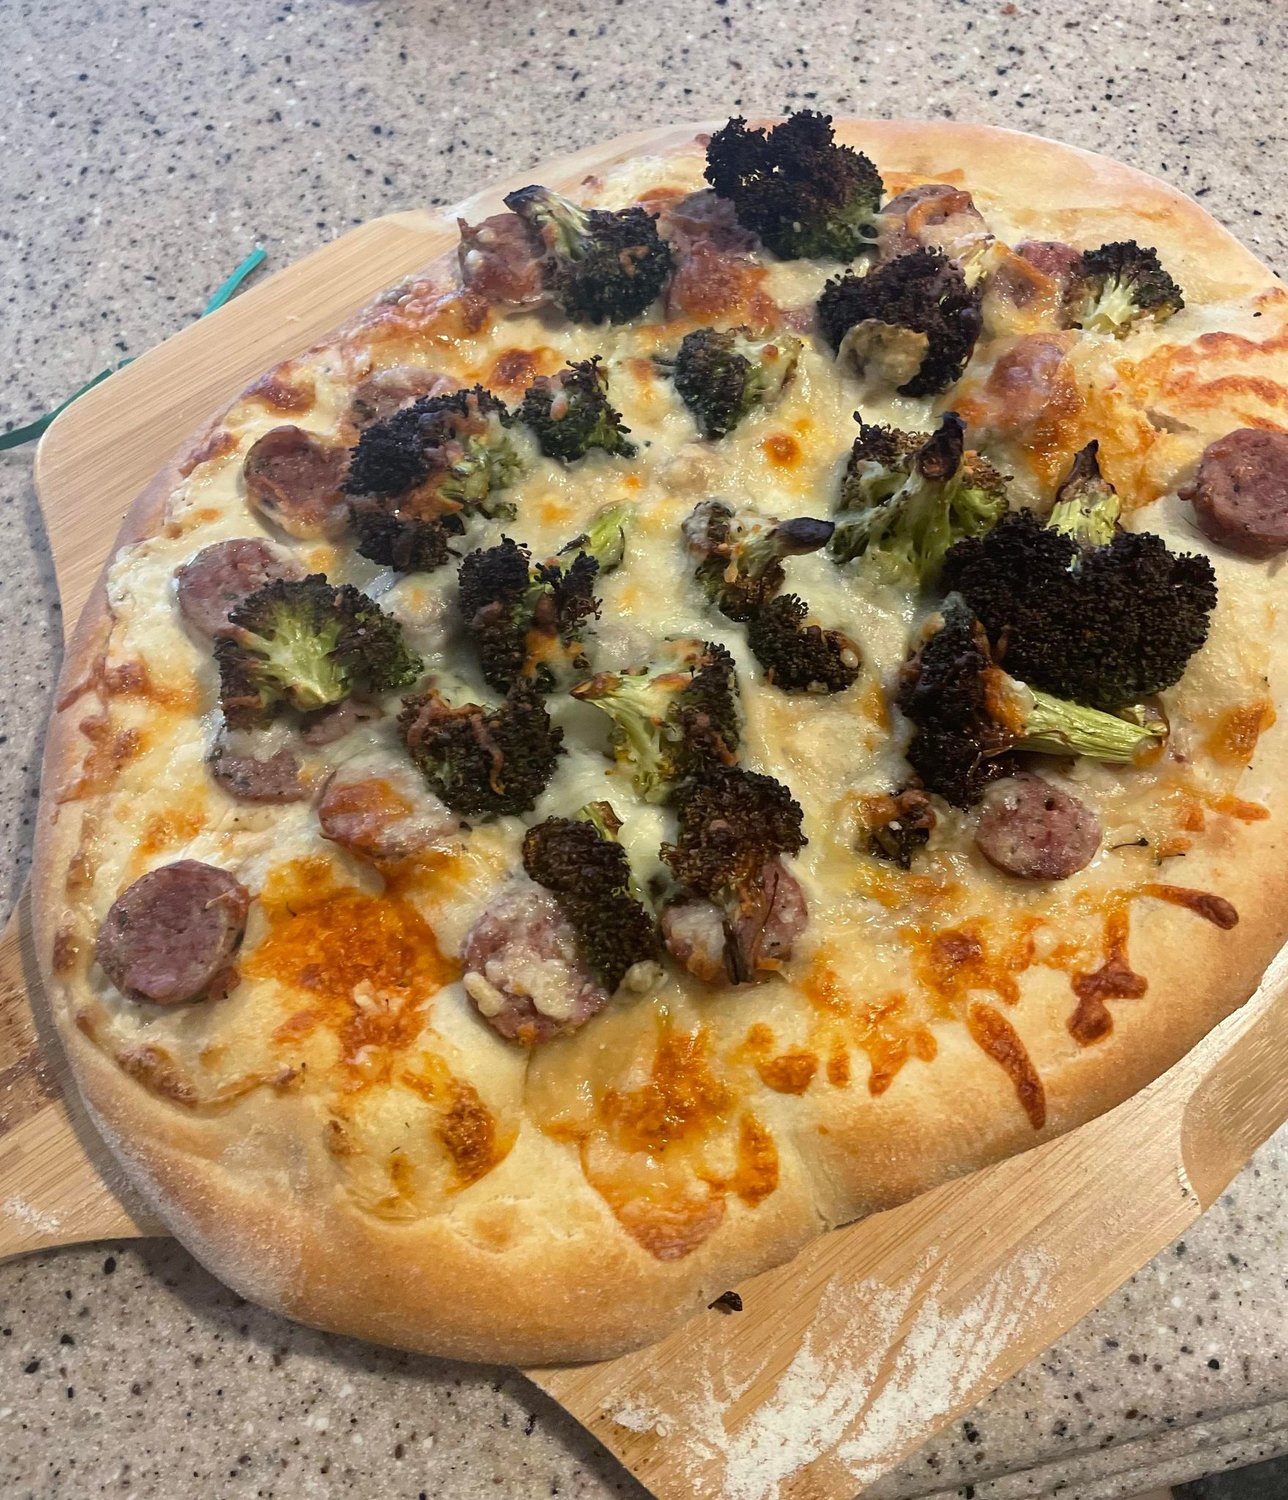 Scott Surdi, Sayville 
Broccoli and broccoli rabe sausage pizza